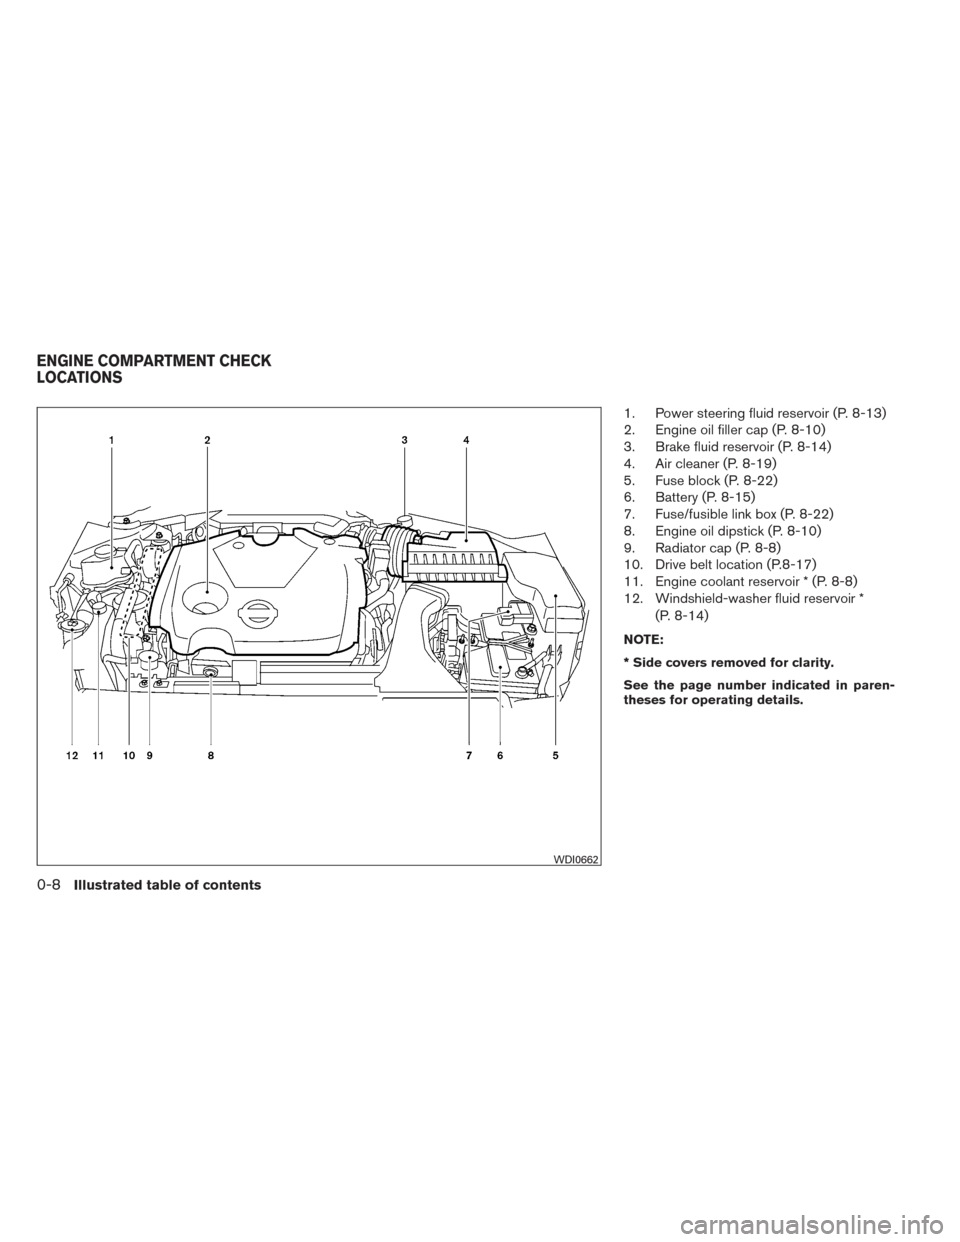 NISSAN MAXIMA 2014 A35 / 7.G User Guide 1. Power steering fluid reservoir (P. 8-13)
2. Engine oil filler cap (P. 8-10)
3. Brake fluid reservoir (P. 8-14)
4. Air cleaner (P. 8-19)
5. Fuse block (P. 8-22)
6. Battery (P. 8-15)
7. Fuse/fusible 